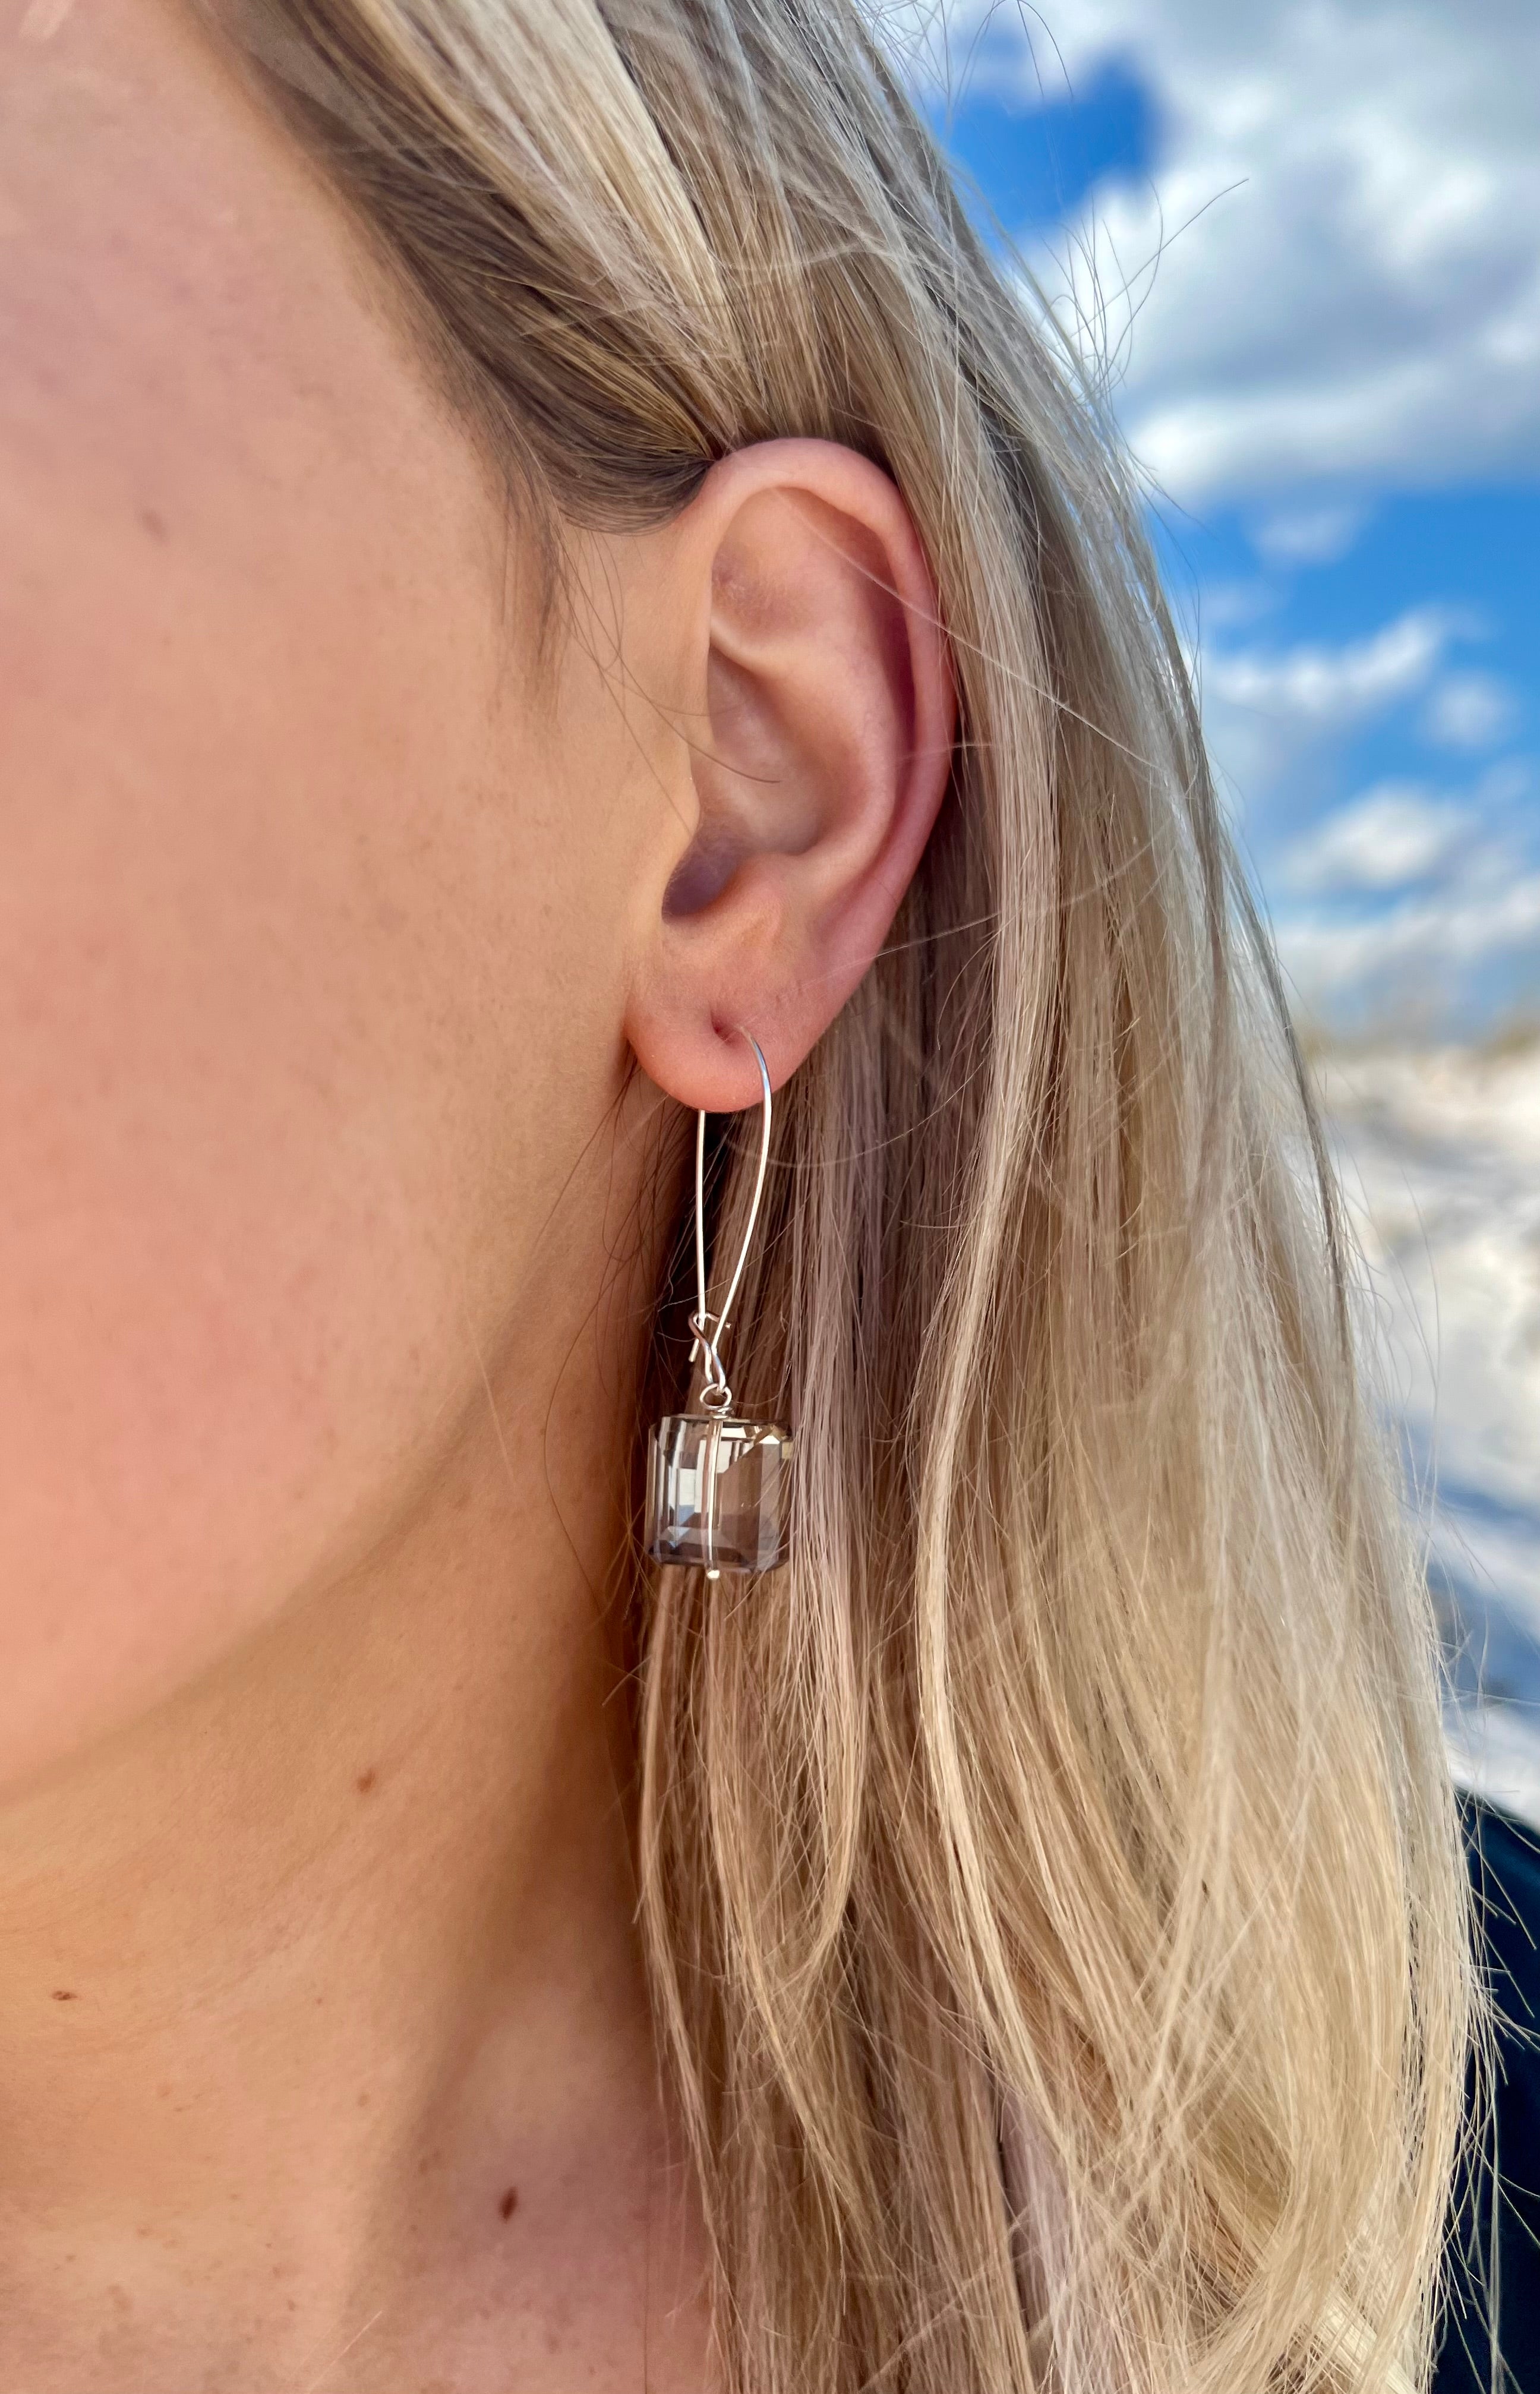 Blair handmade silver earrings with dangle detail in ear